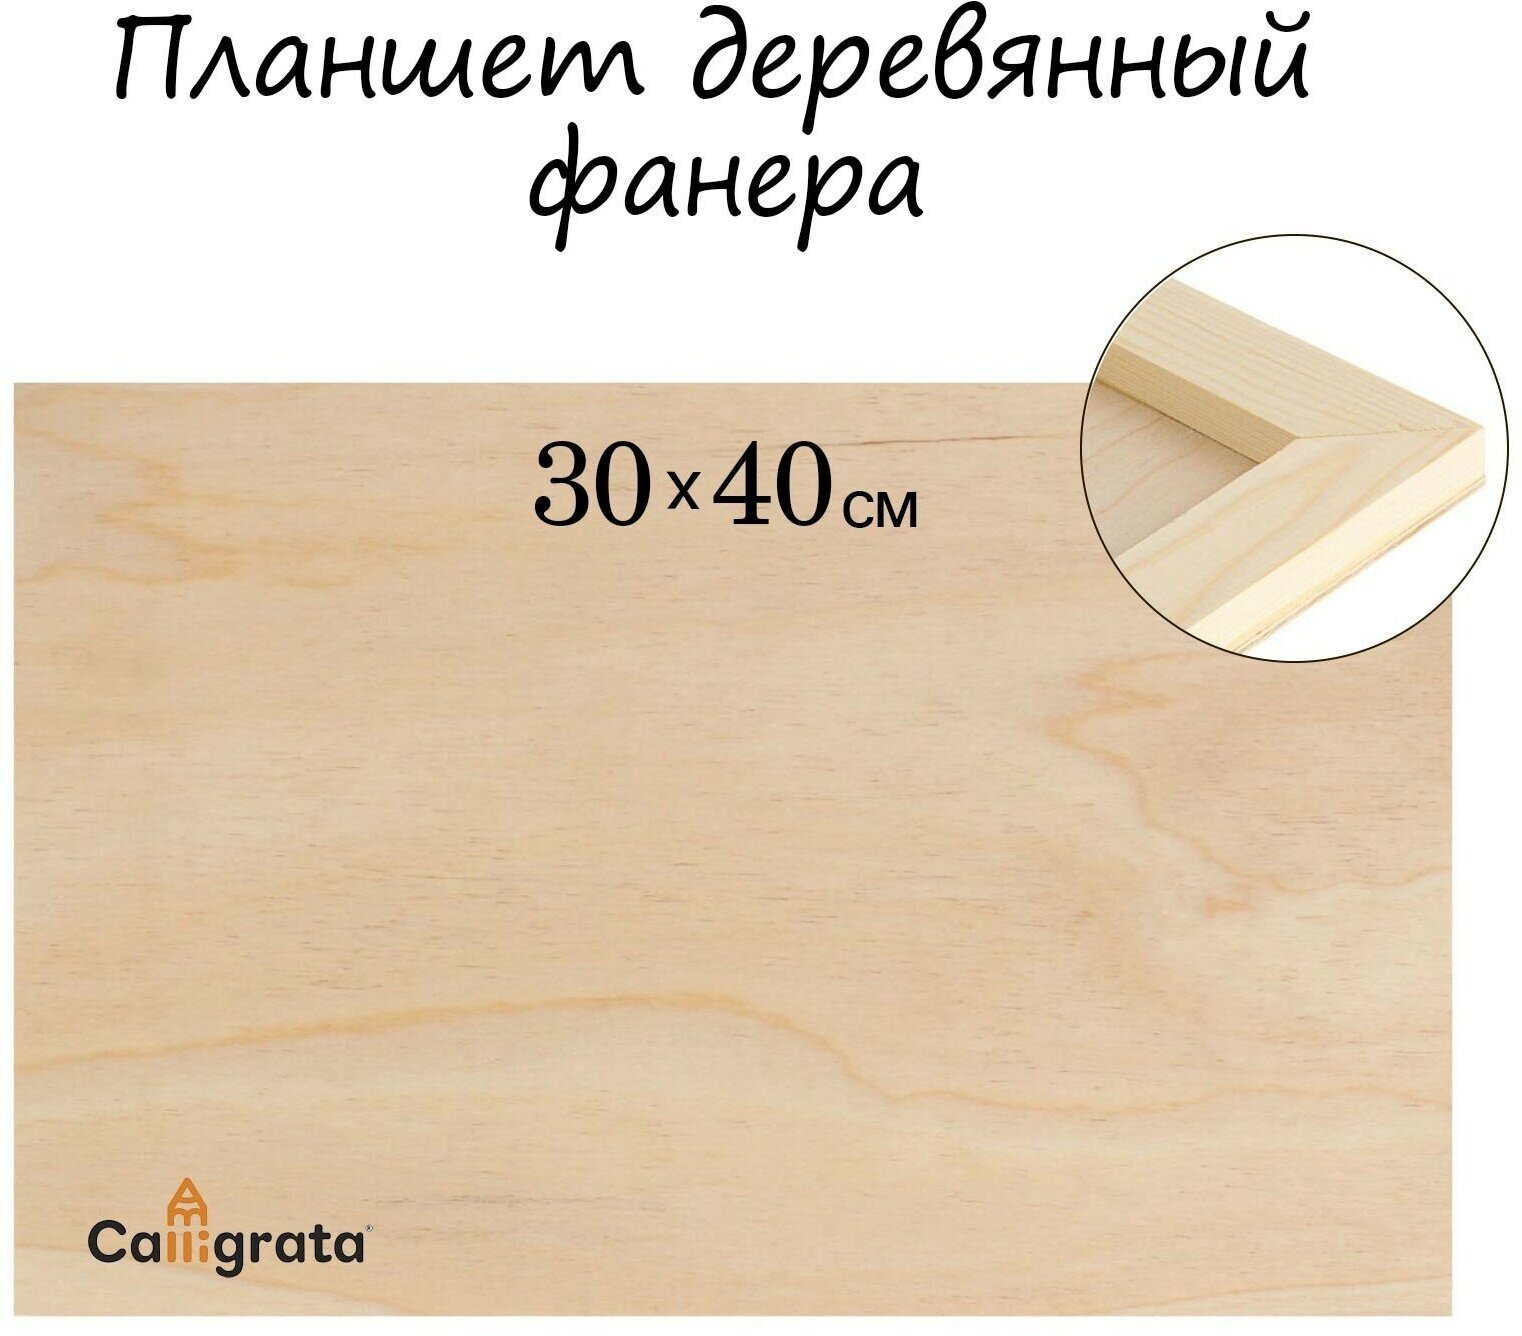 Планшет деревянный 30 х 40 х 2 см, фанера